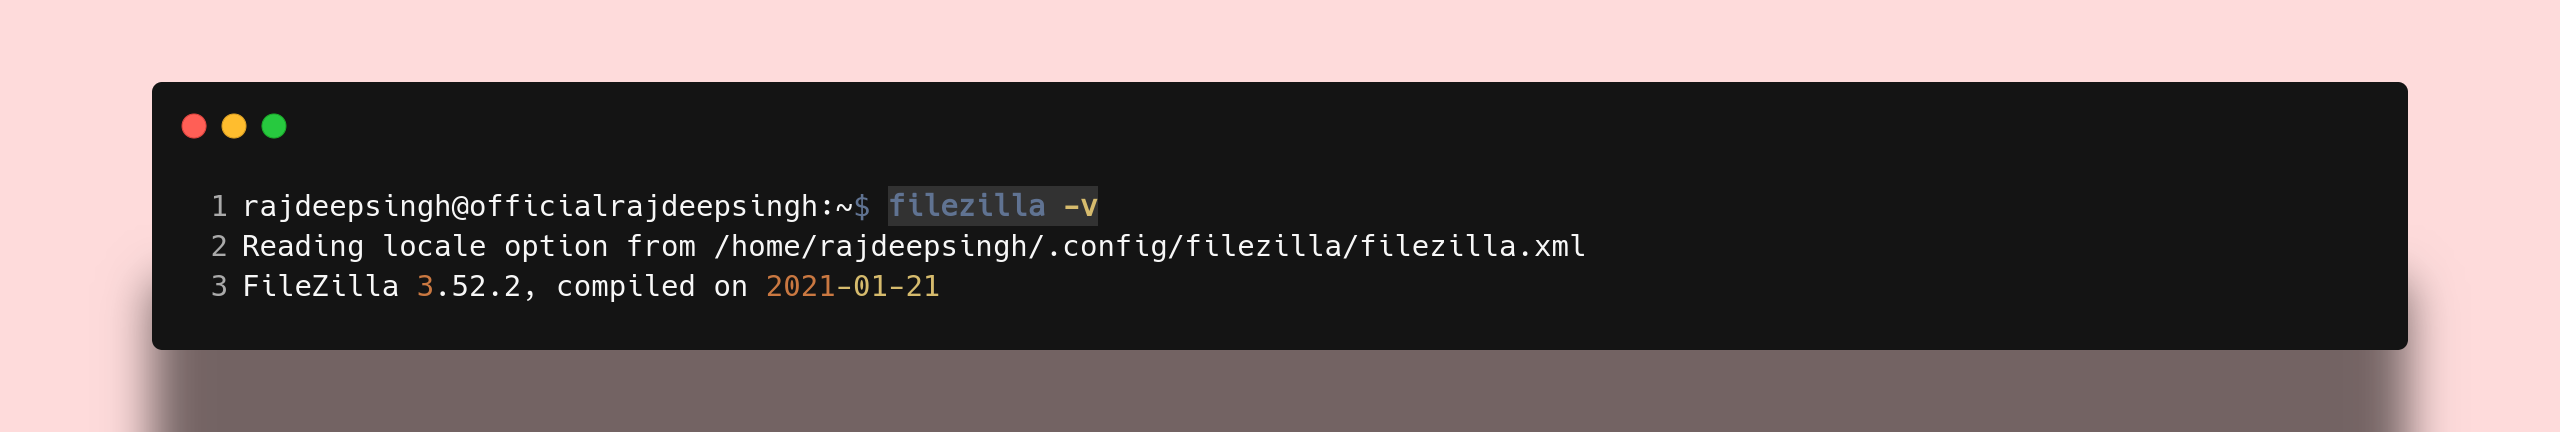 Filezilla version command output